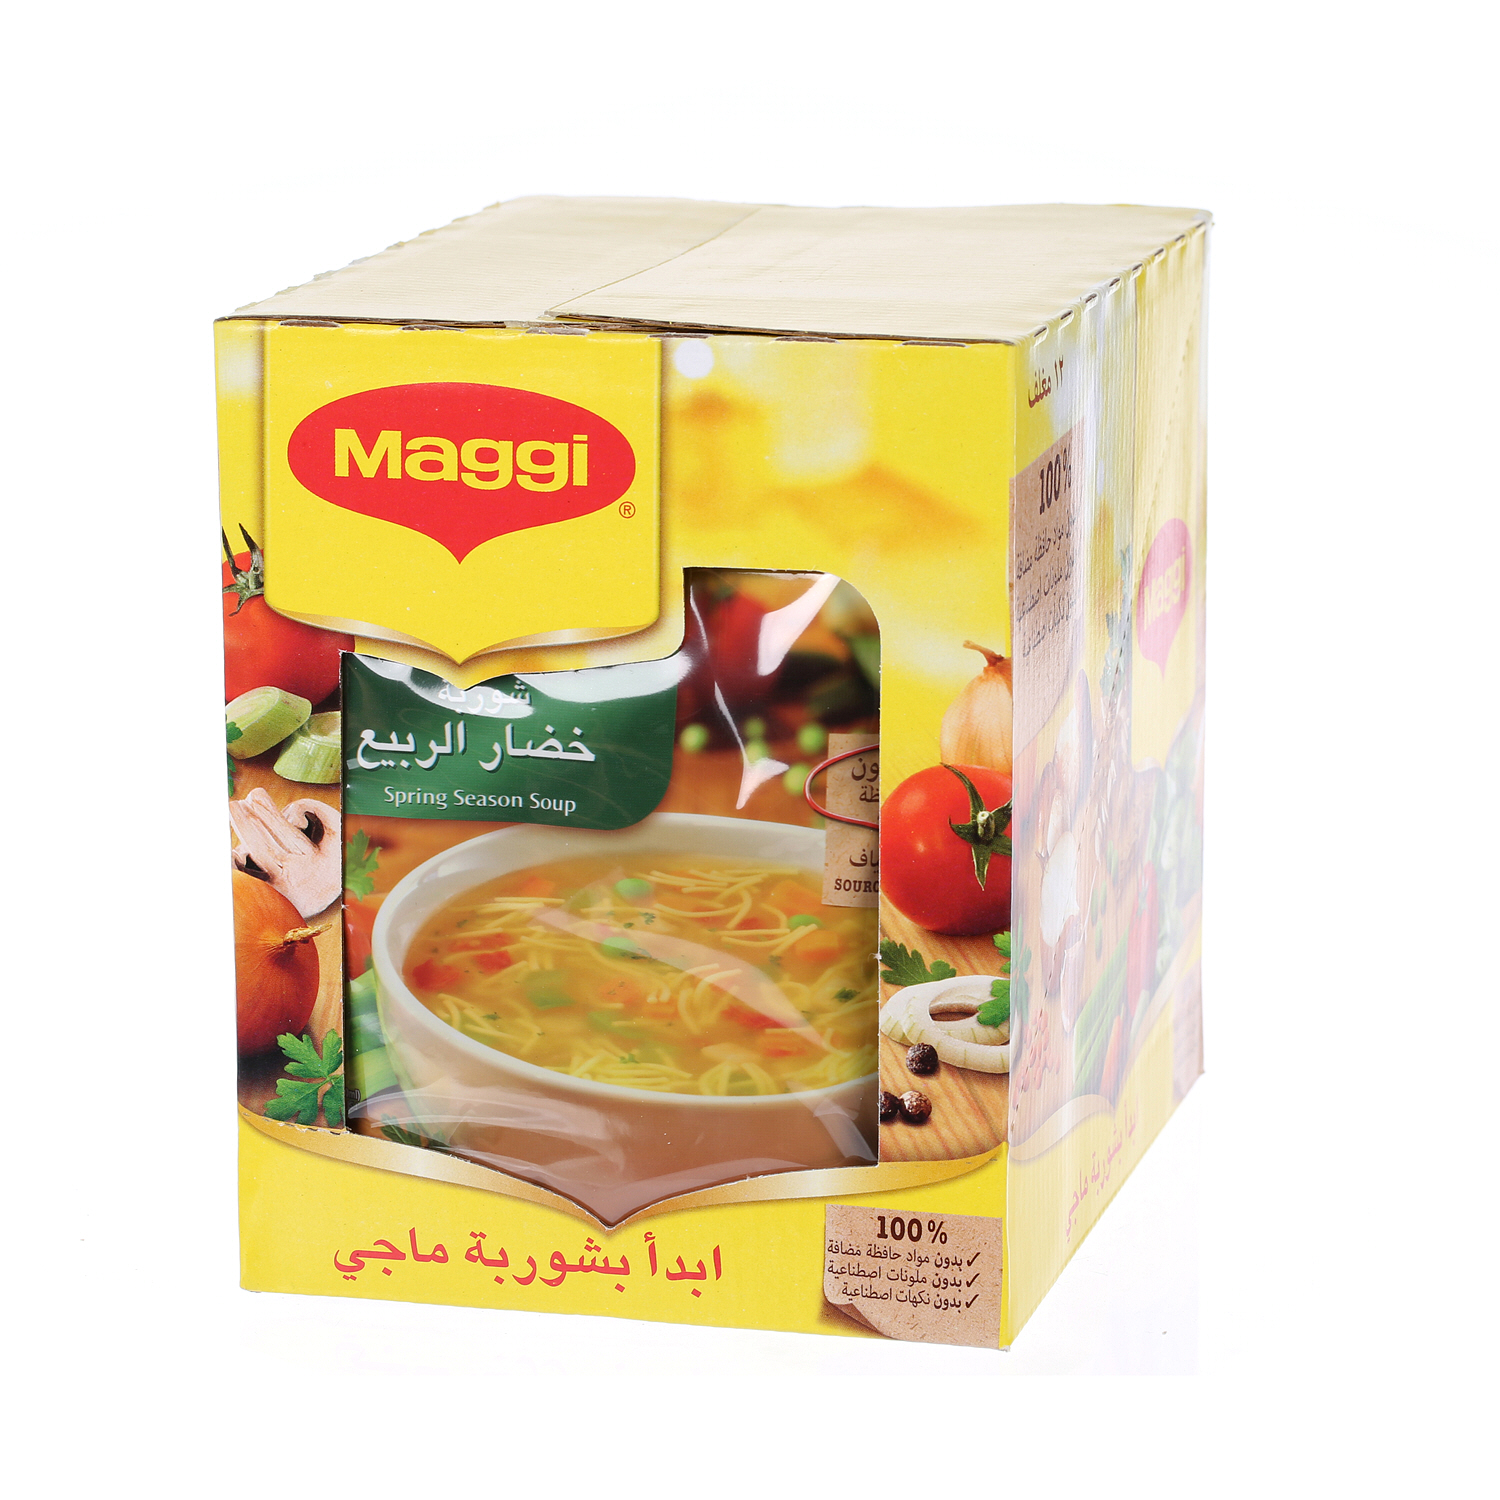 Maggi Spring Season Soup 59g × 12 Pack